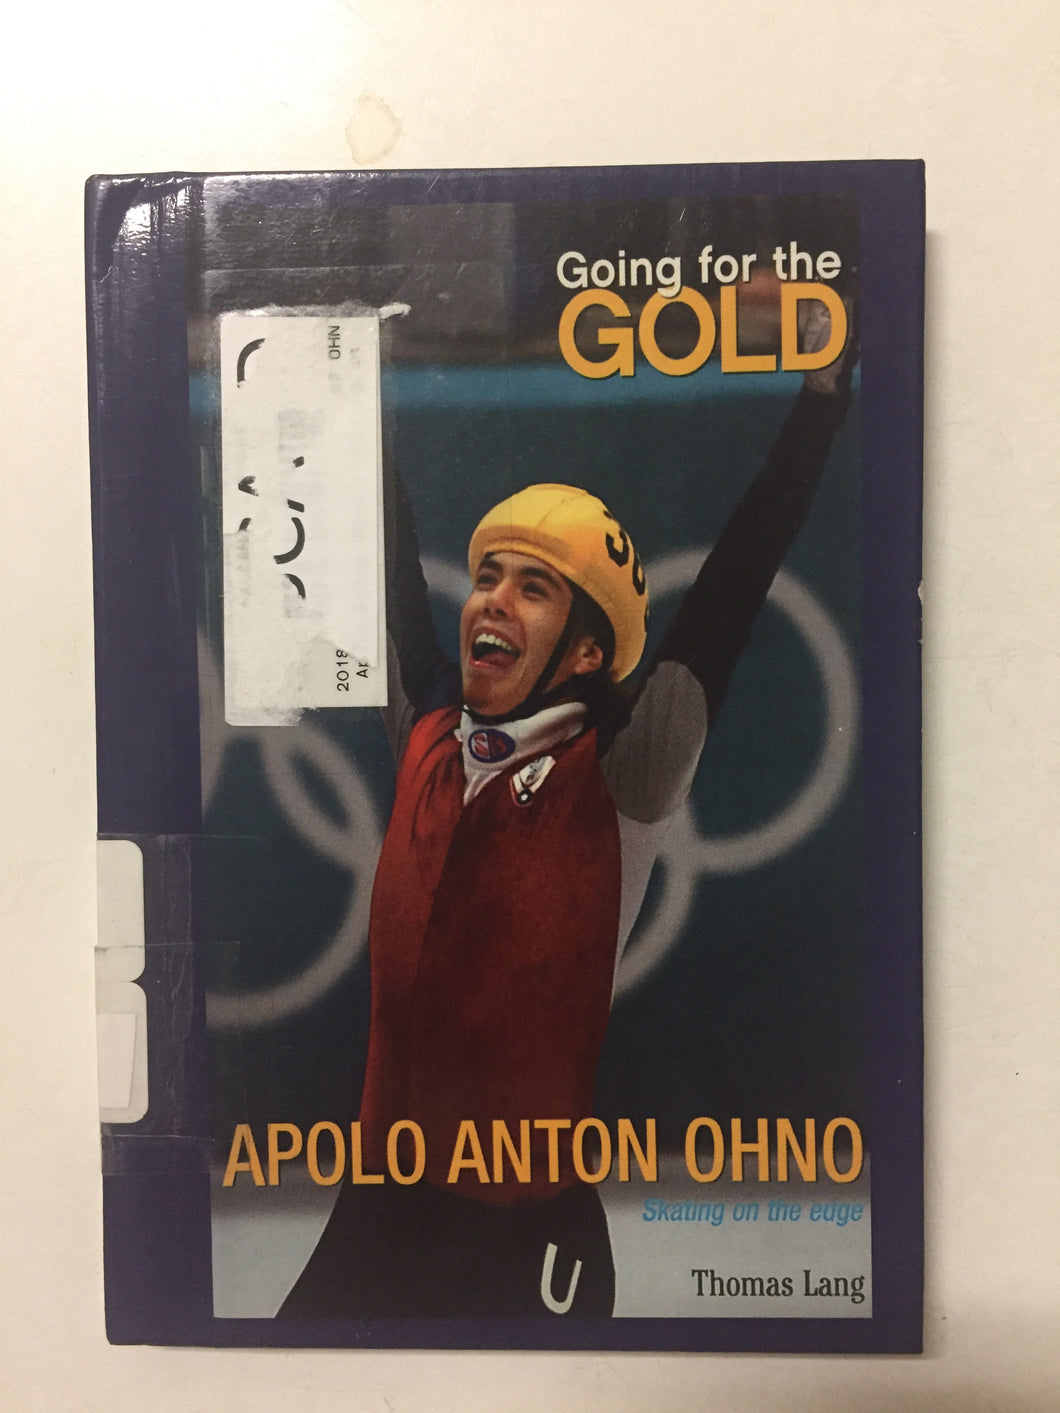 Apollo Anton Ohno - Slick Cat Books 